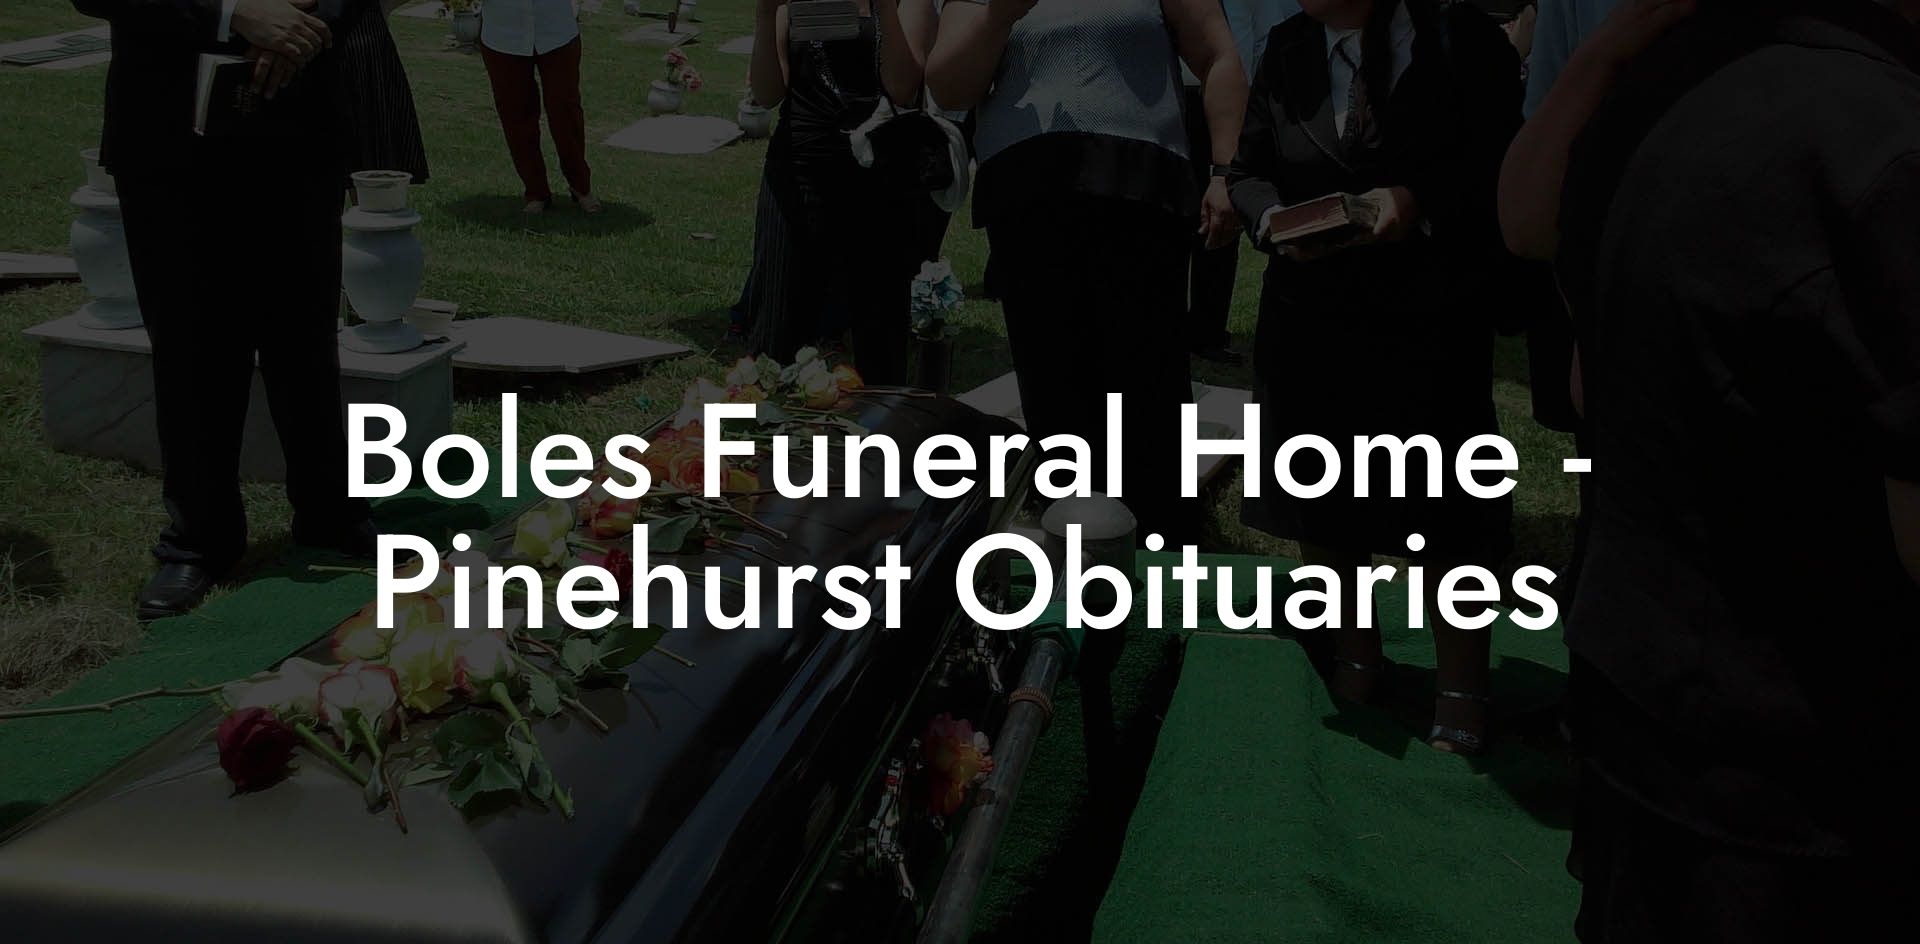 Boles Funeral Home - Pinehurst Obituaries